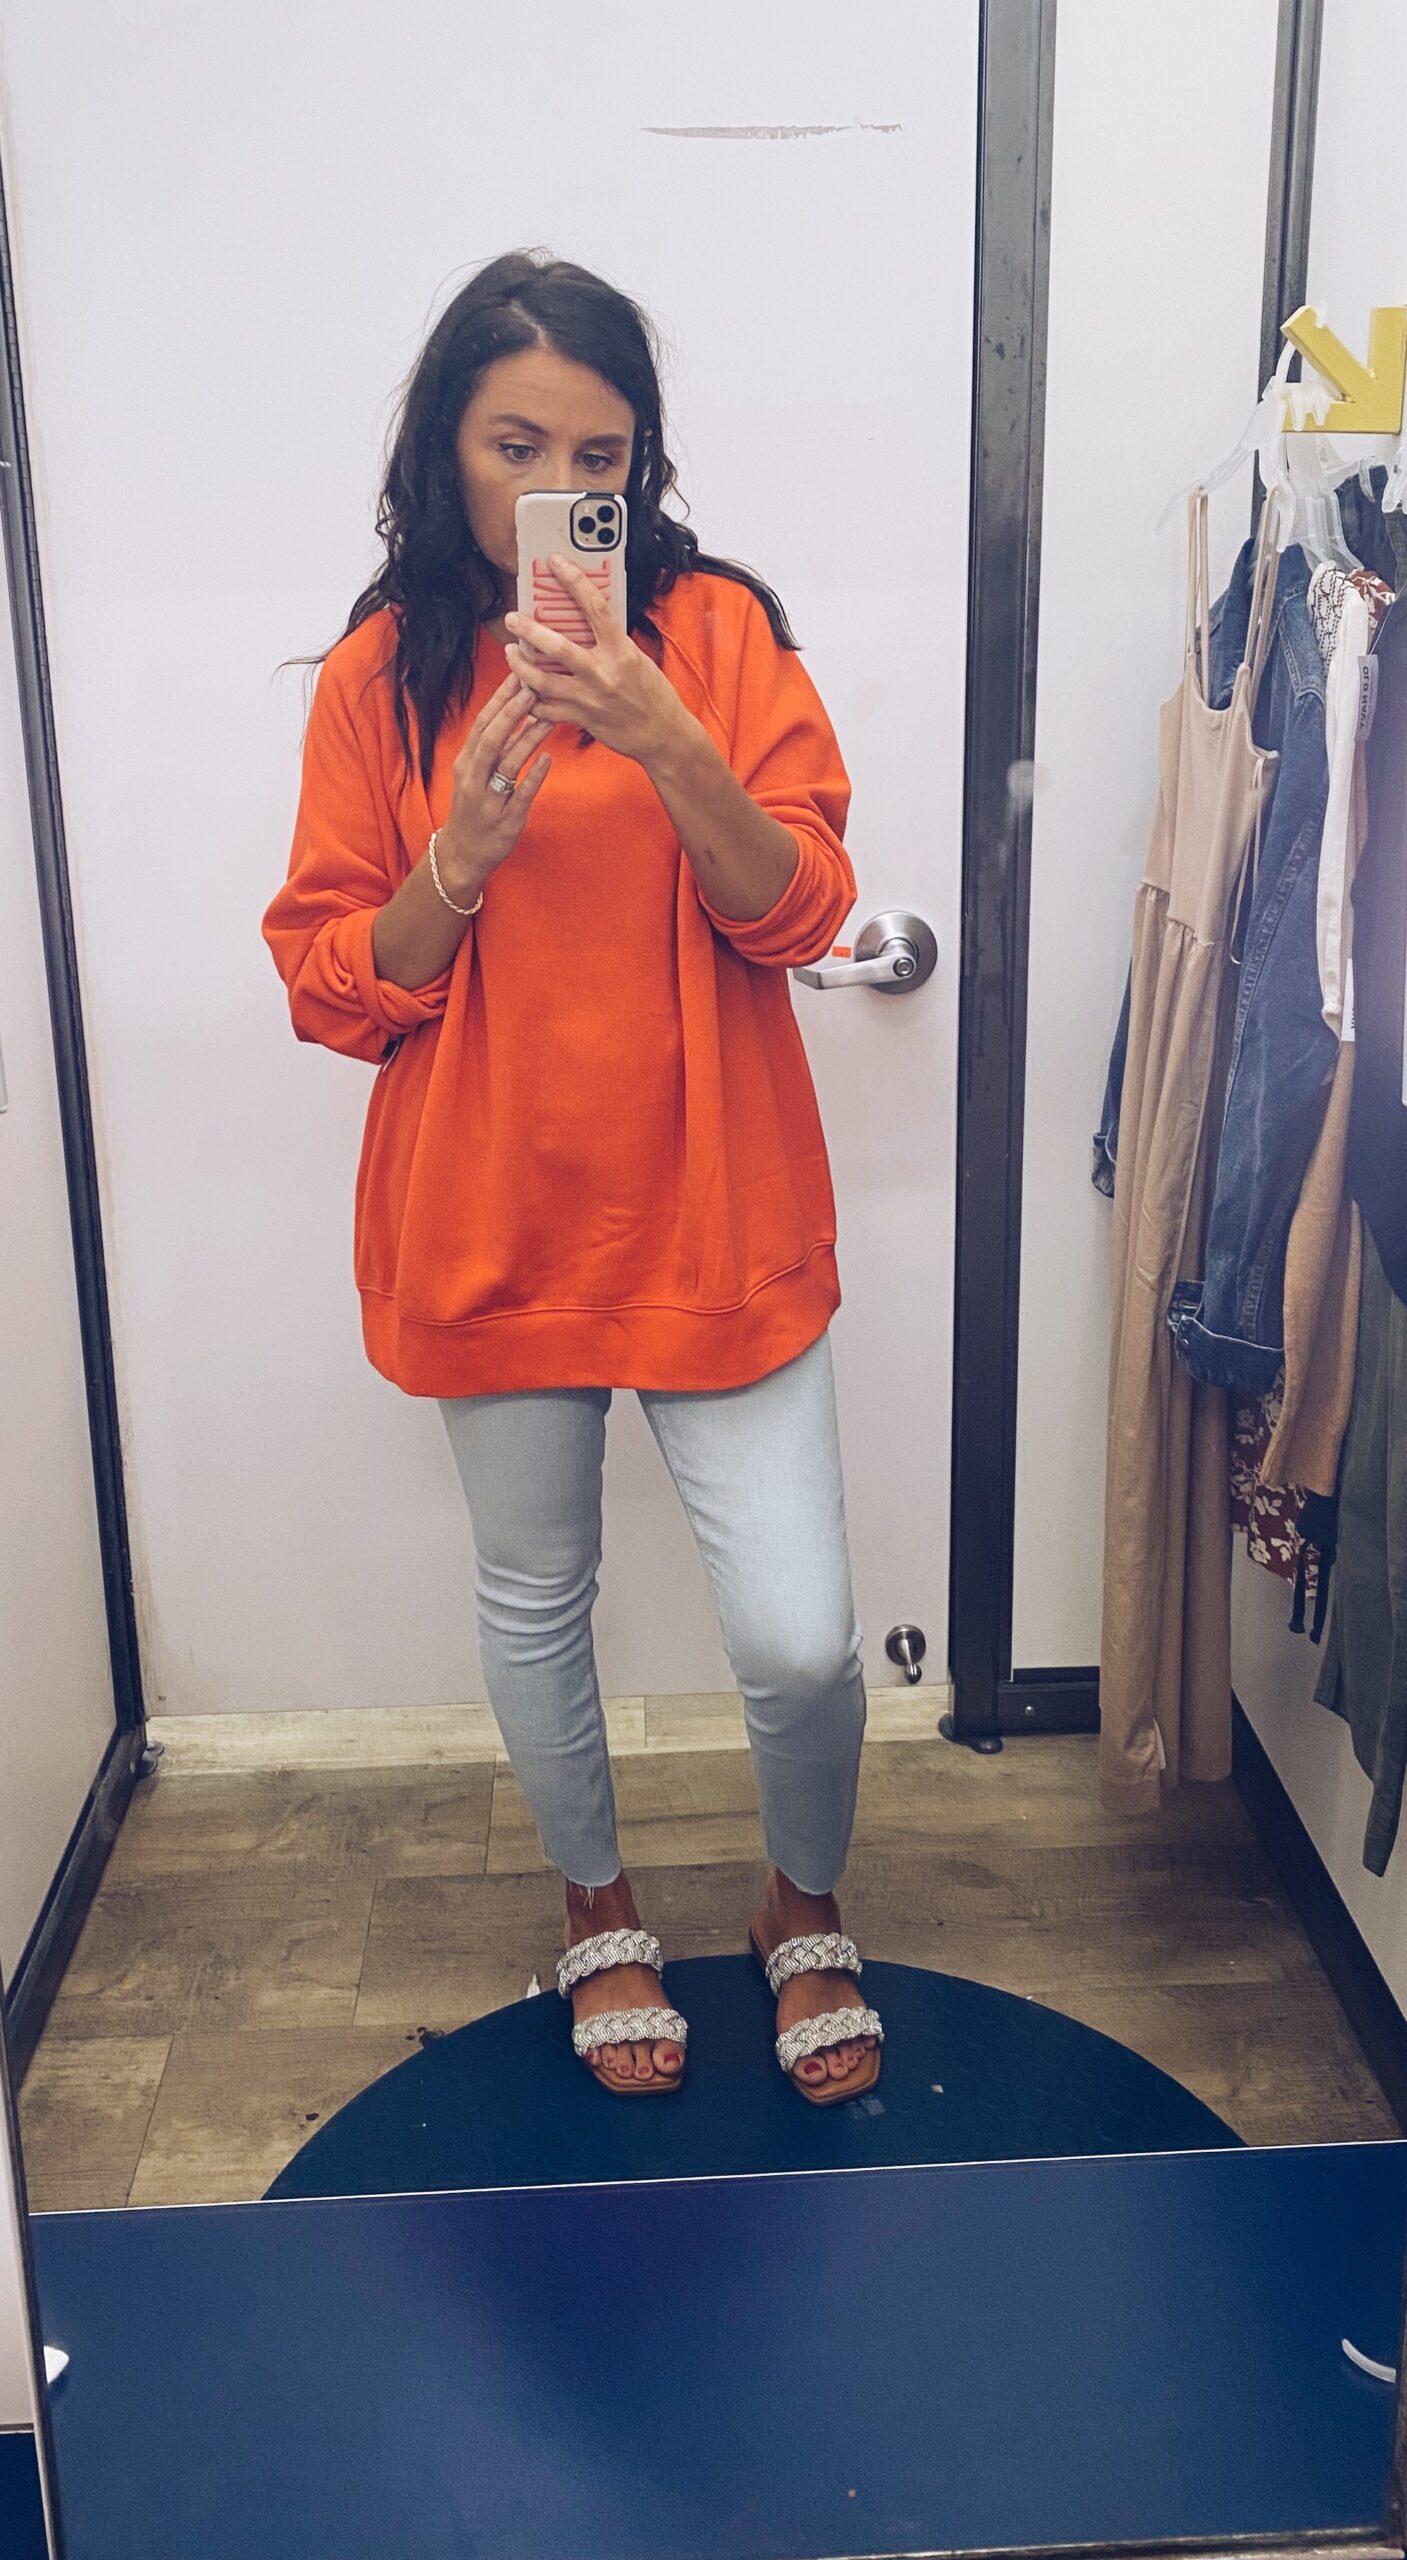 Woman wearing orange sweatshirt and jeans